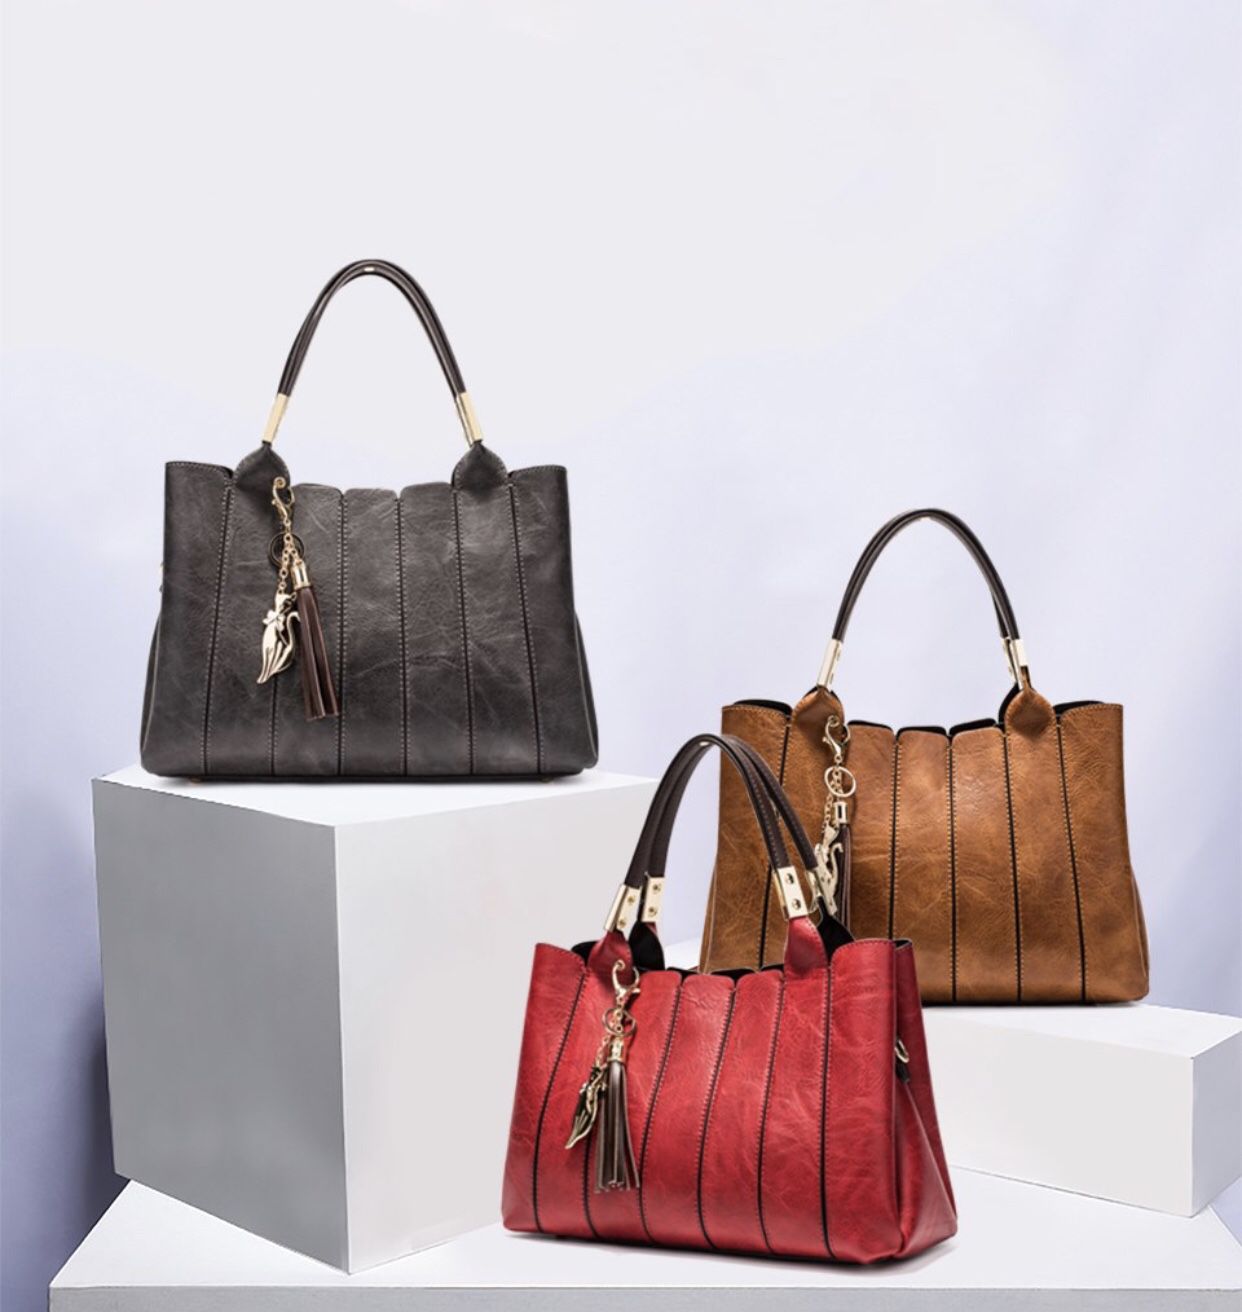 Luxury Women Handbag Vintage brown Female Totes Shoulder Bag Messenger Bag Leather Top-HandBags with tassel.